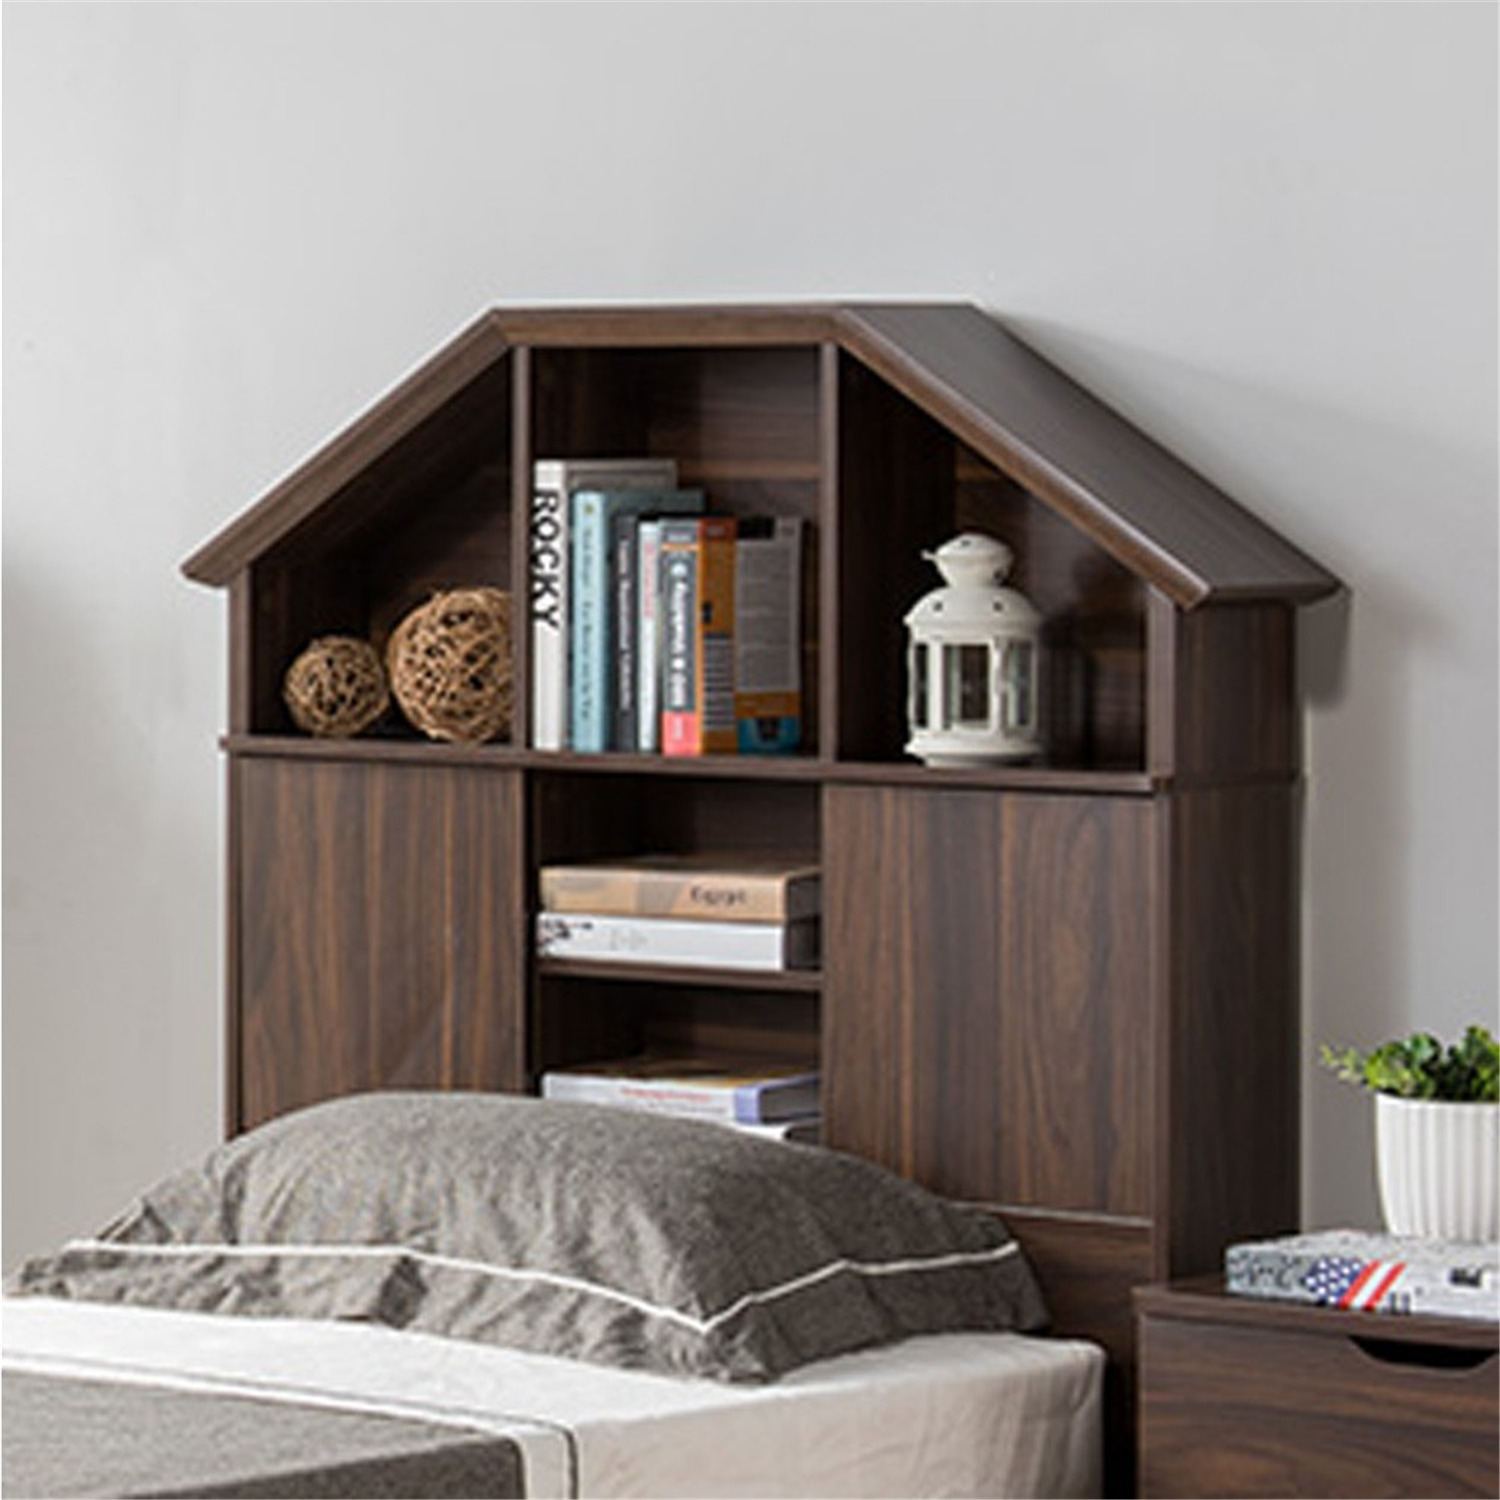 Benzara Twin Size Hut Style Bookcase Headboard In Wood, Dark Walnut Brown - image 1 of 5